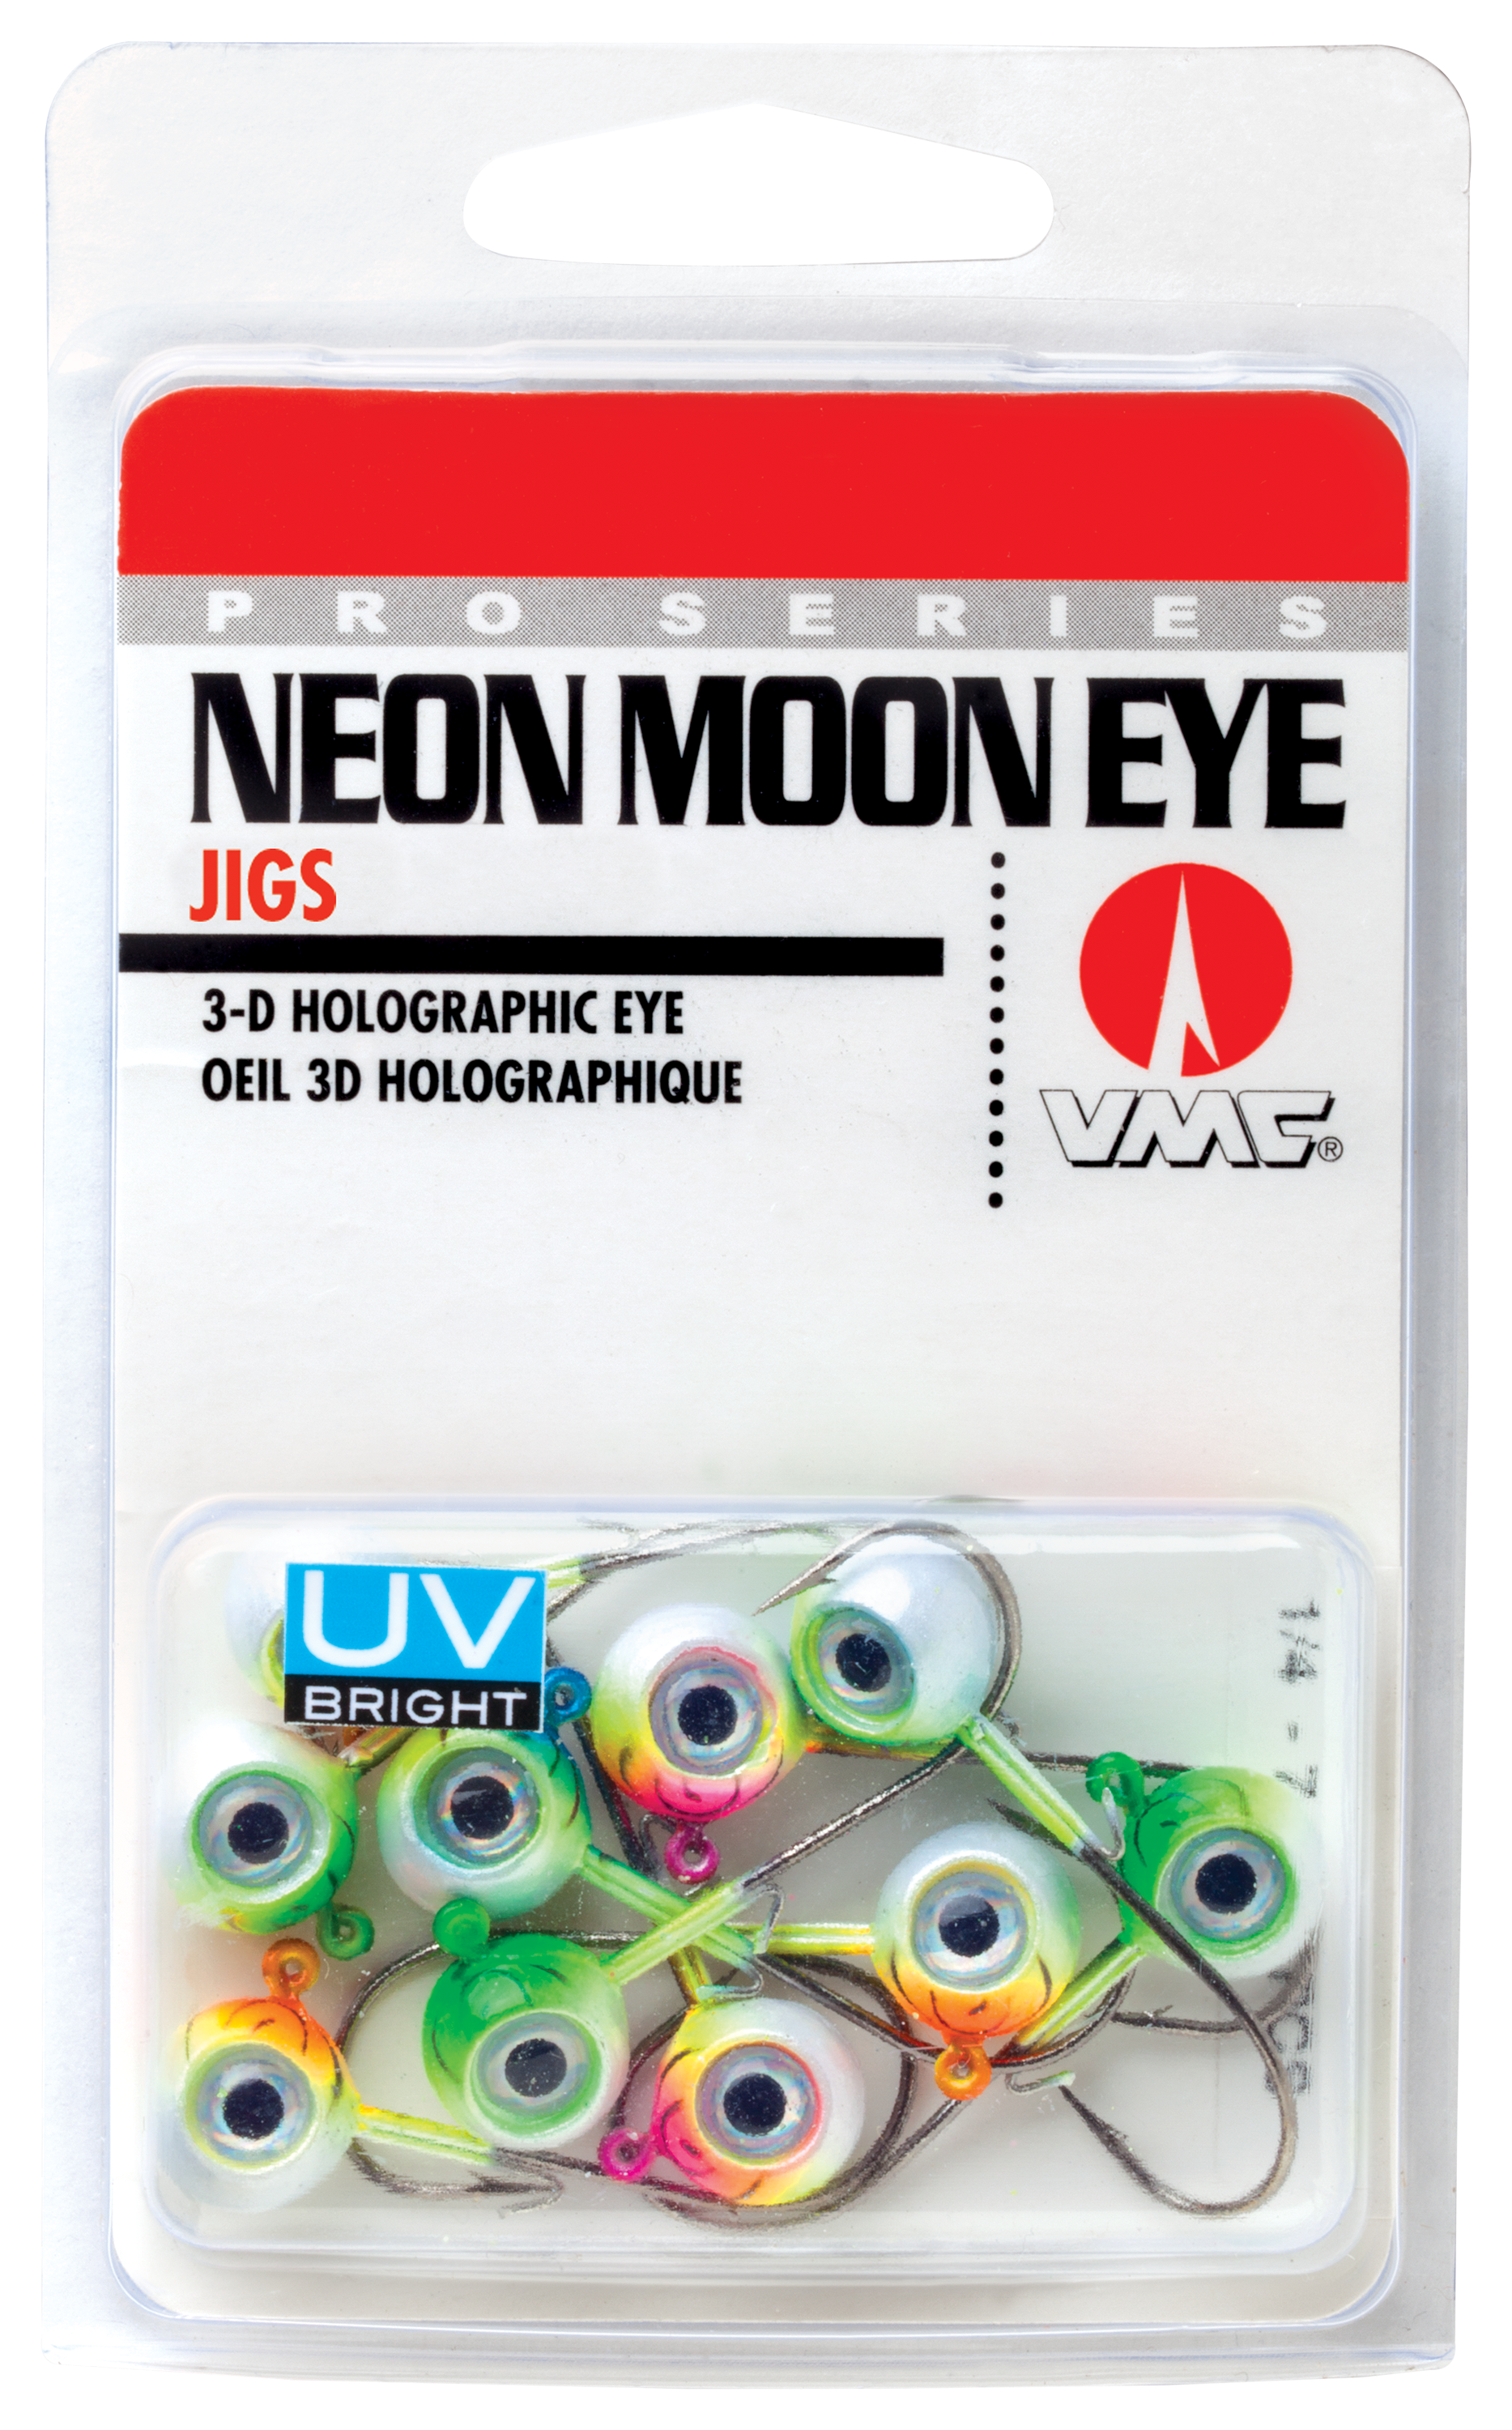 VMC Glow Neon Moon Eye Jig Kit 1/8 oz.